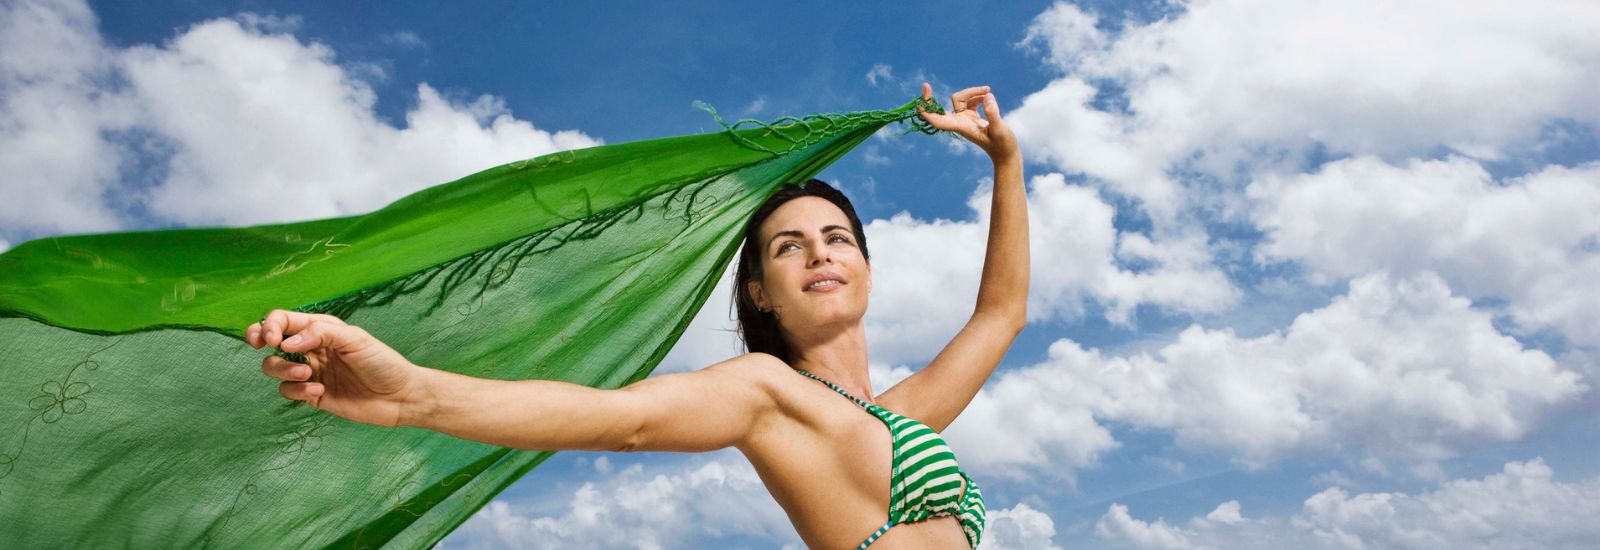 A woman in a bikini holding onto a green cloth